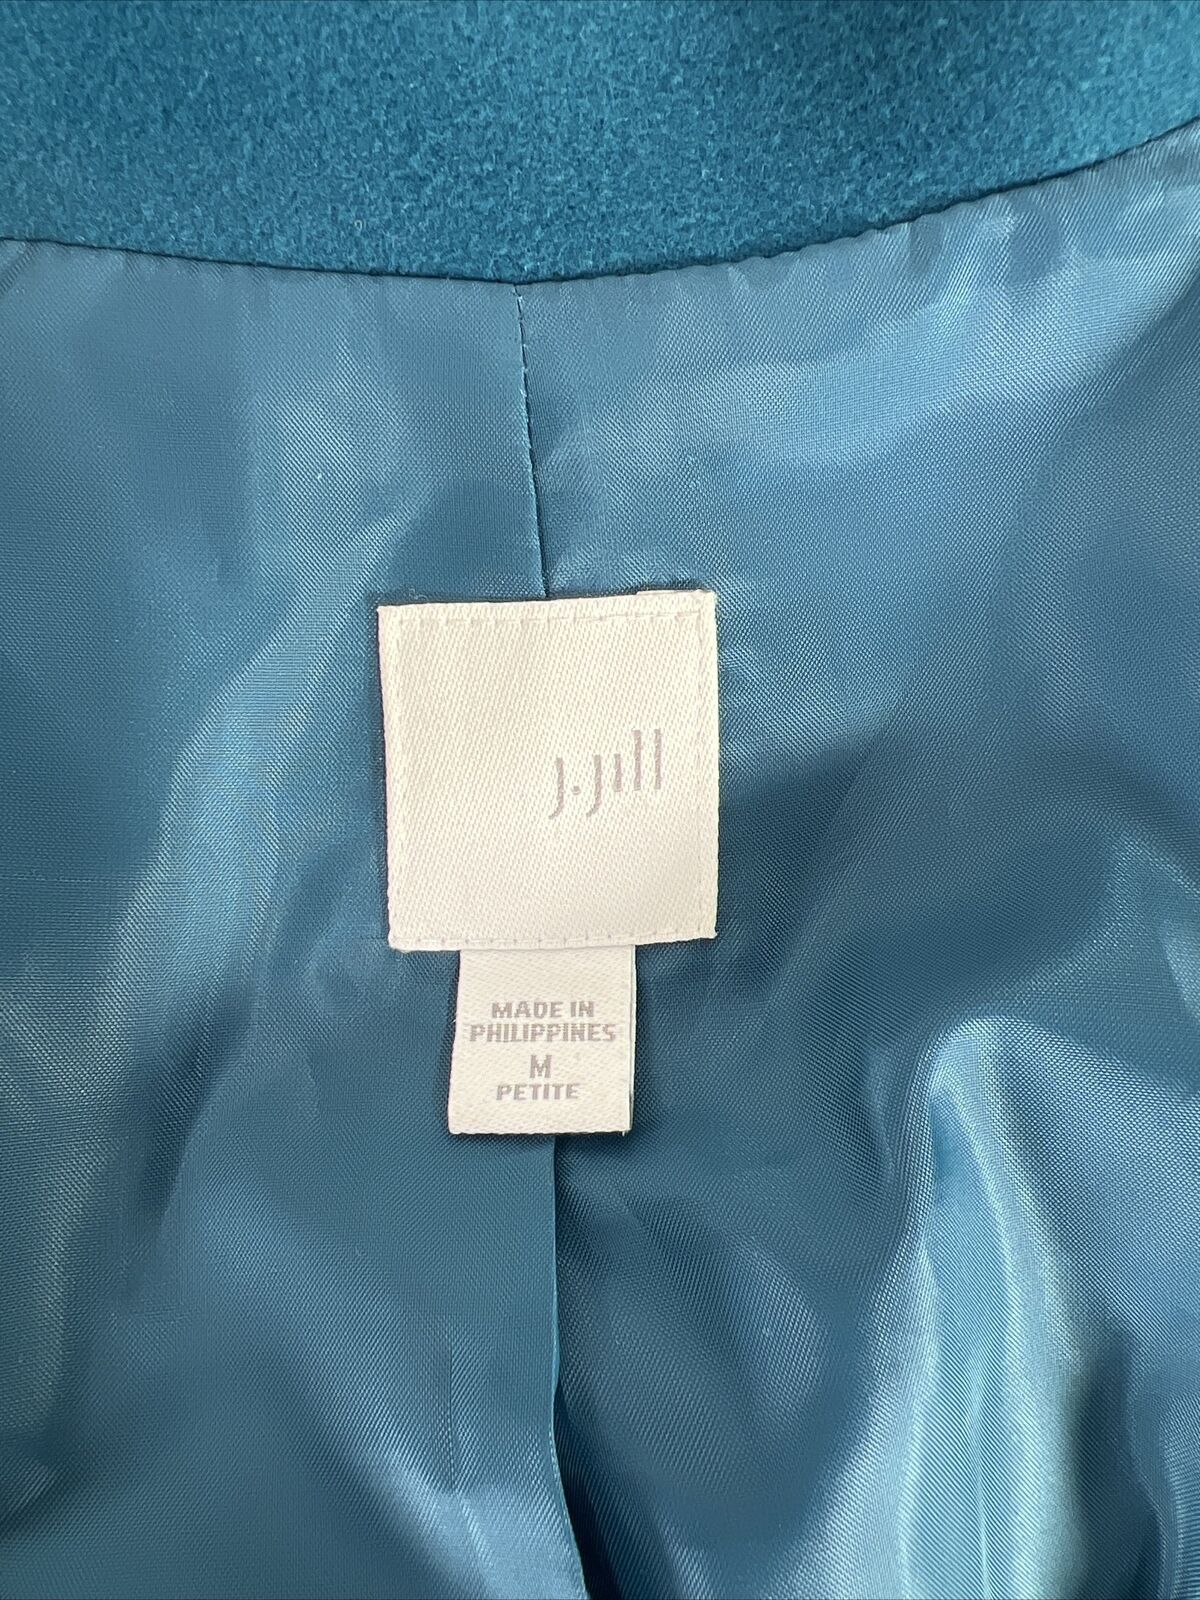 J. Jill Women's Blue Micro-Fleece Button Up Coat - Petite M